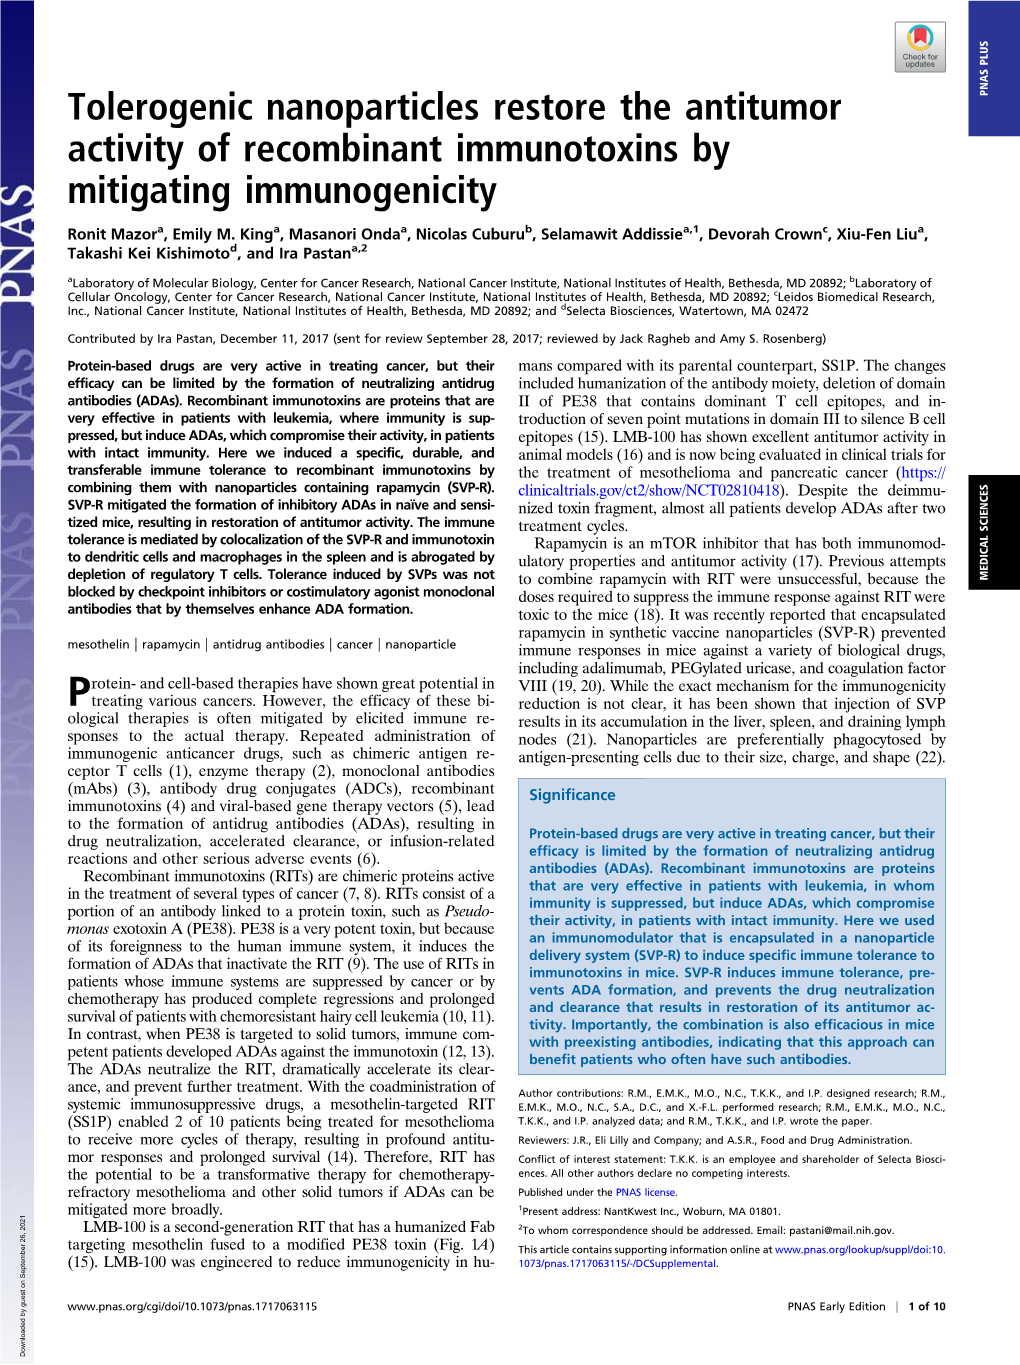 Tolerogenic Nanoparticles Restore the Antitumor Activity of Recombinant